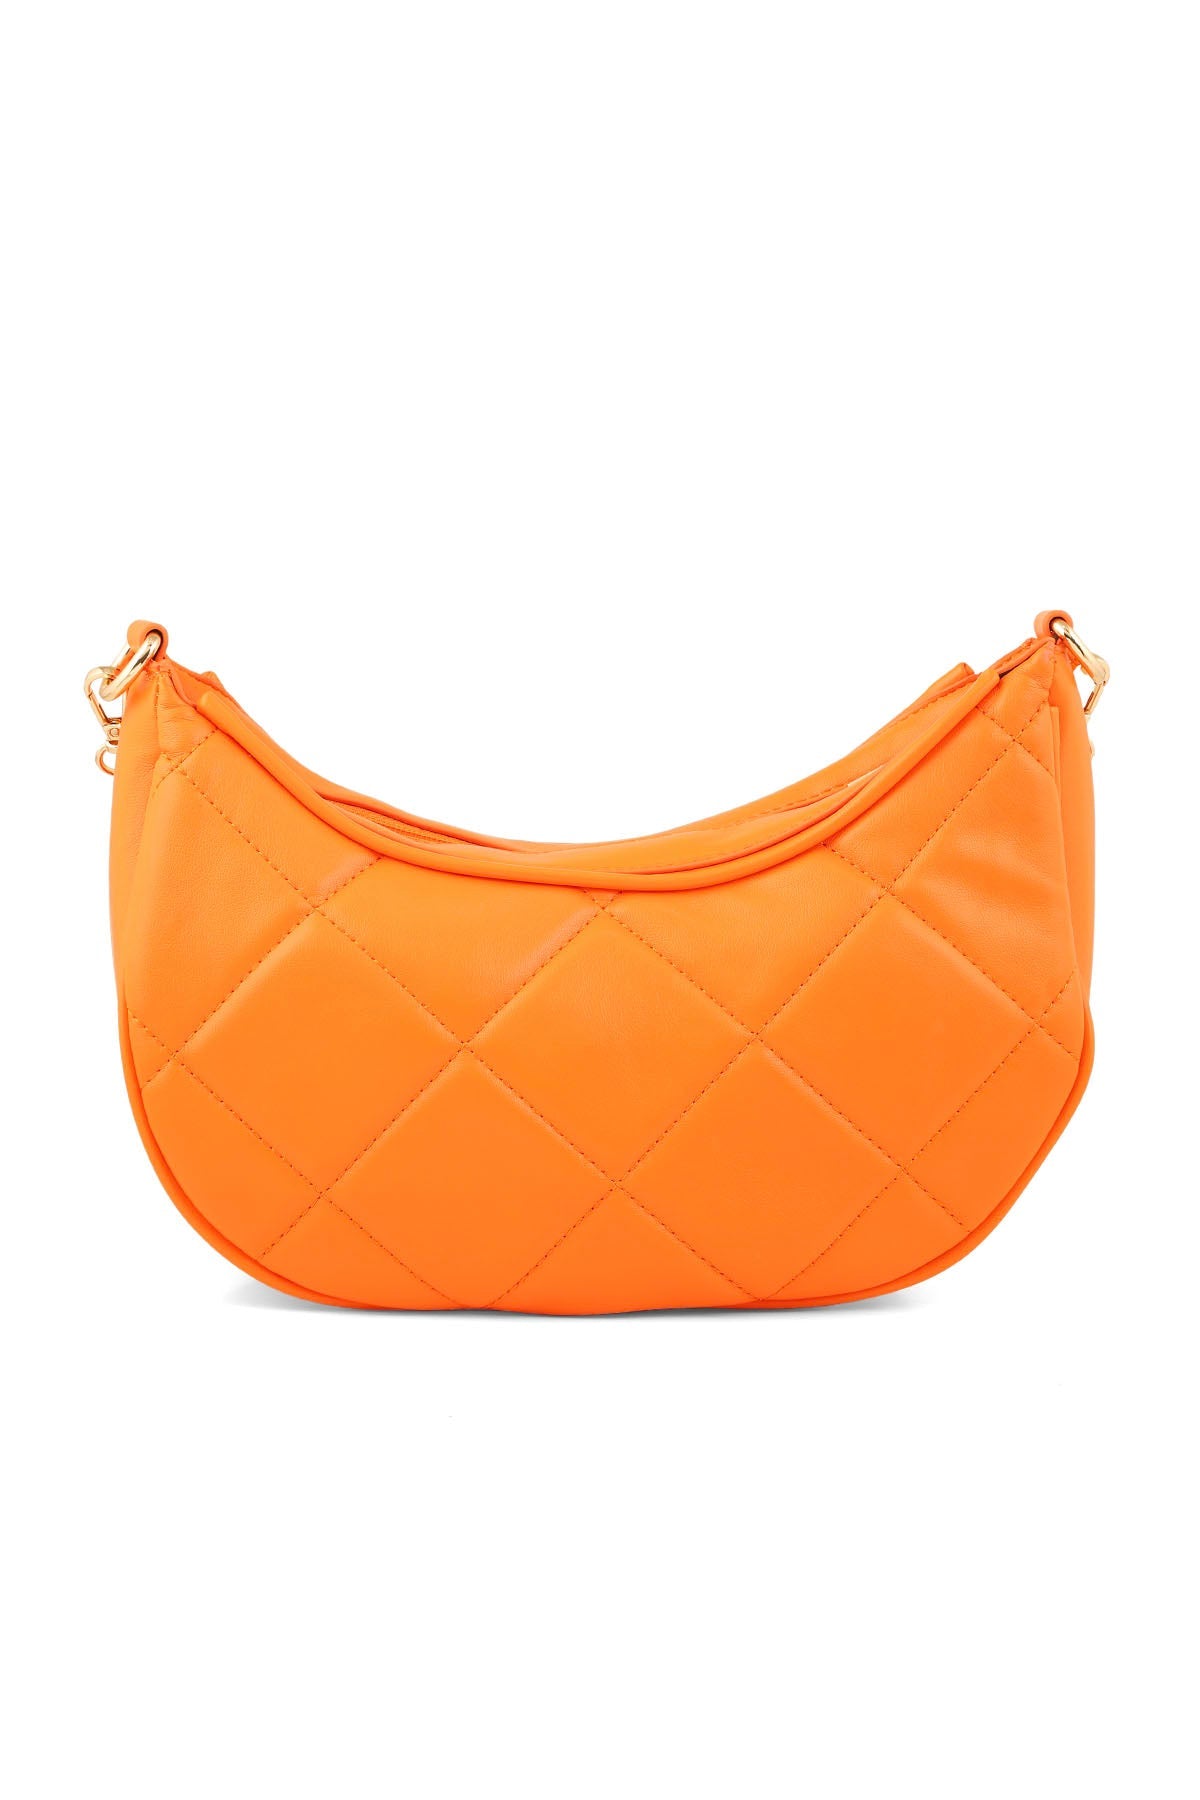 Baguette Shoulder Bags B15137-Orange